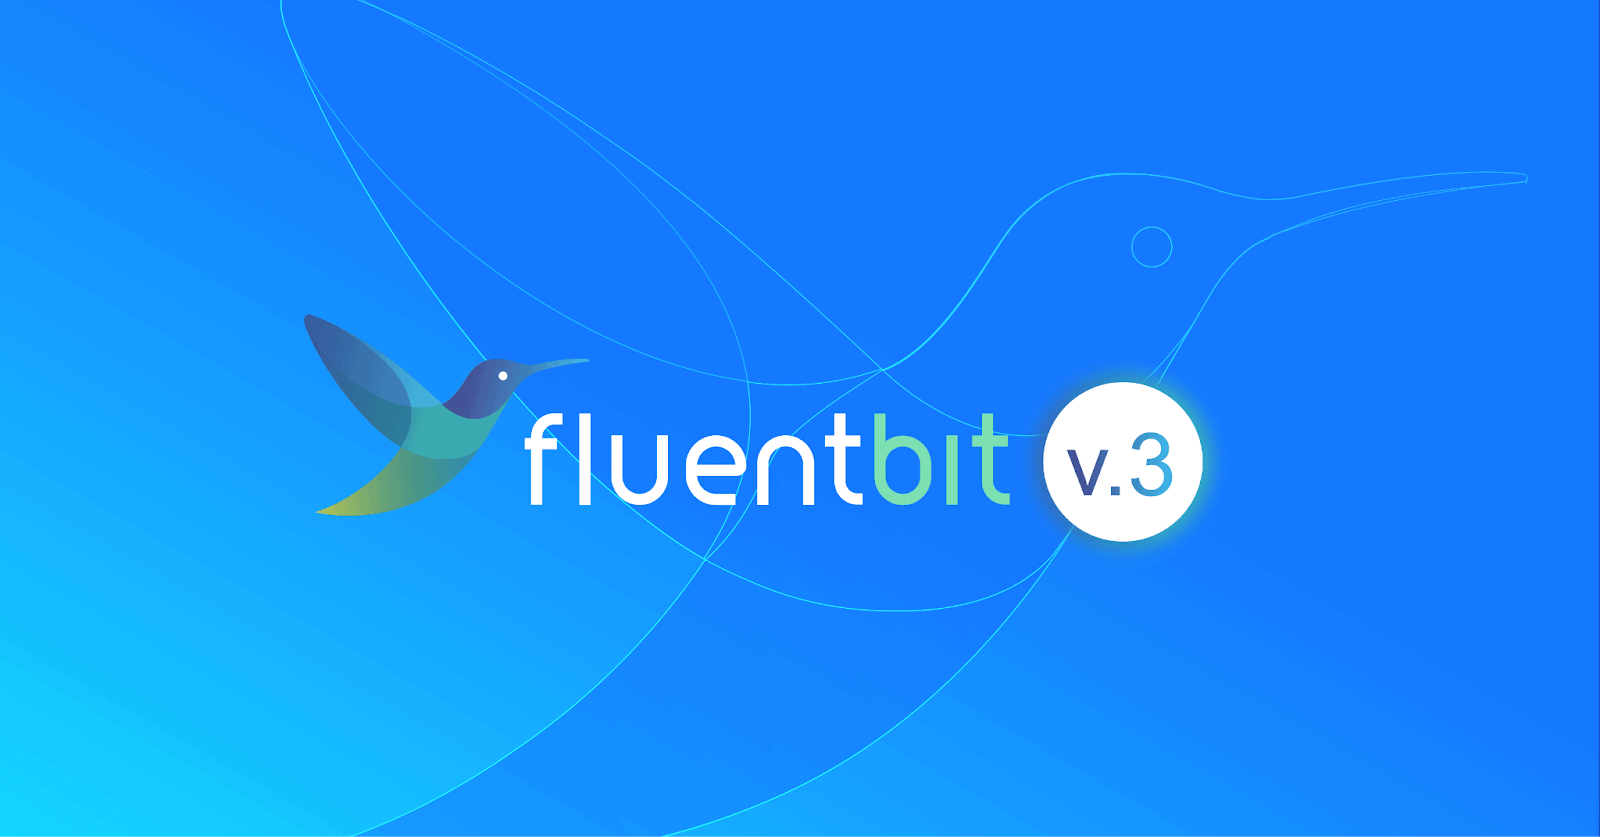 Fluentbit V.3